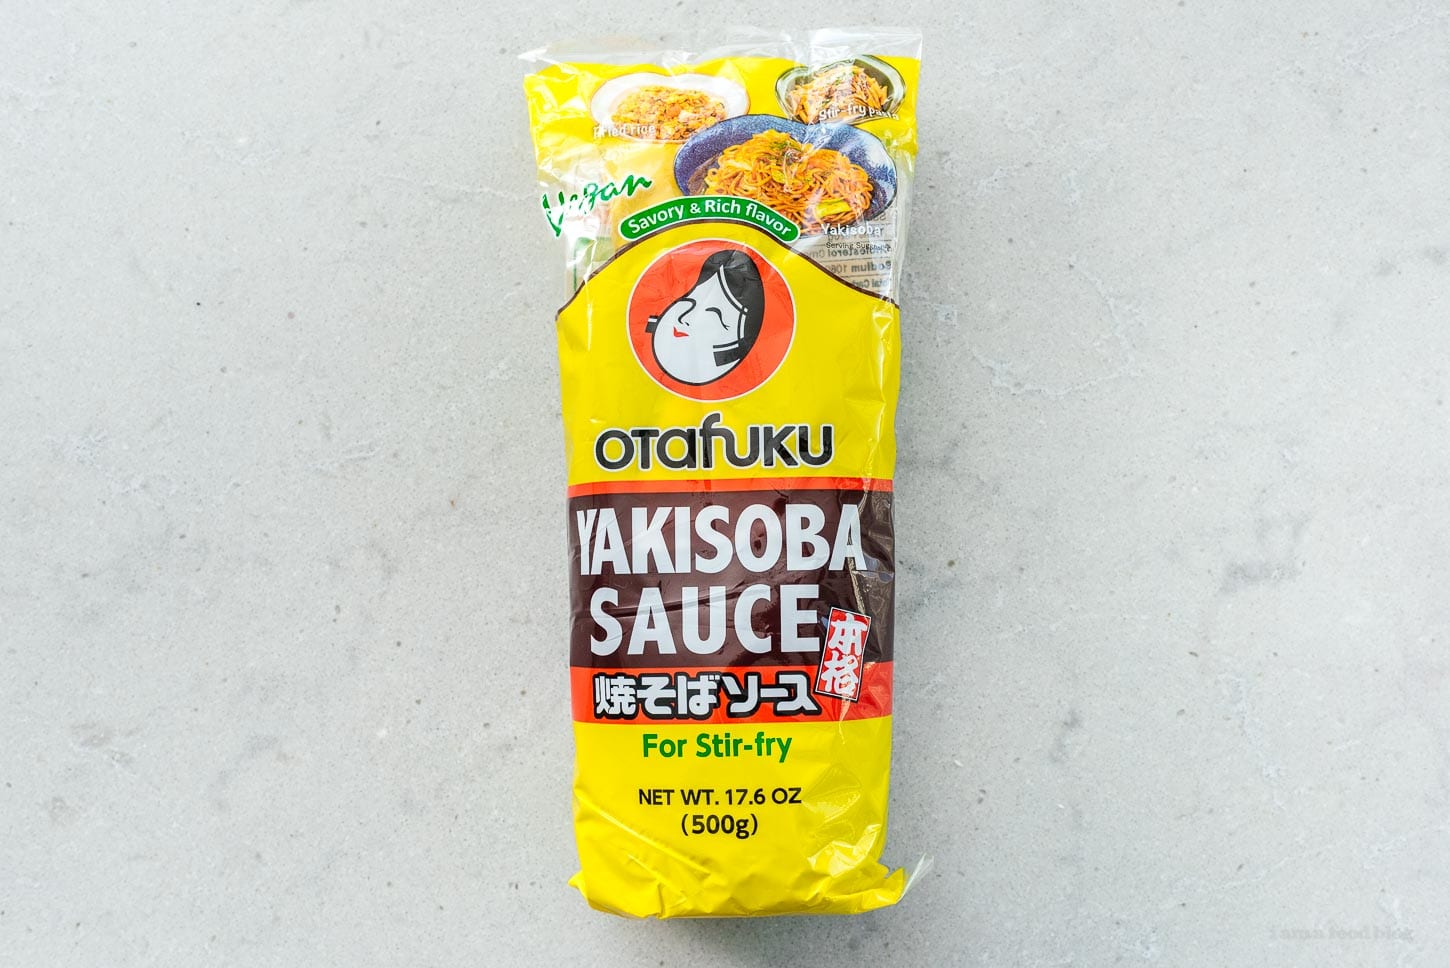 yakisoba sauce | sharefavoritefood.com